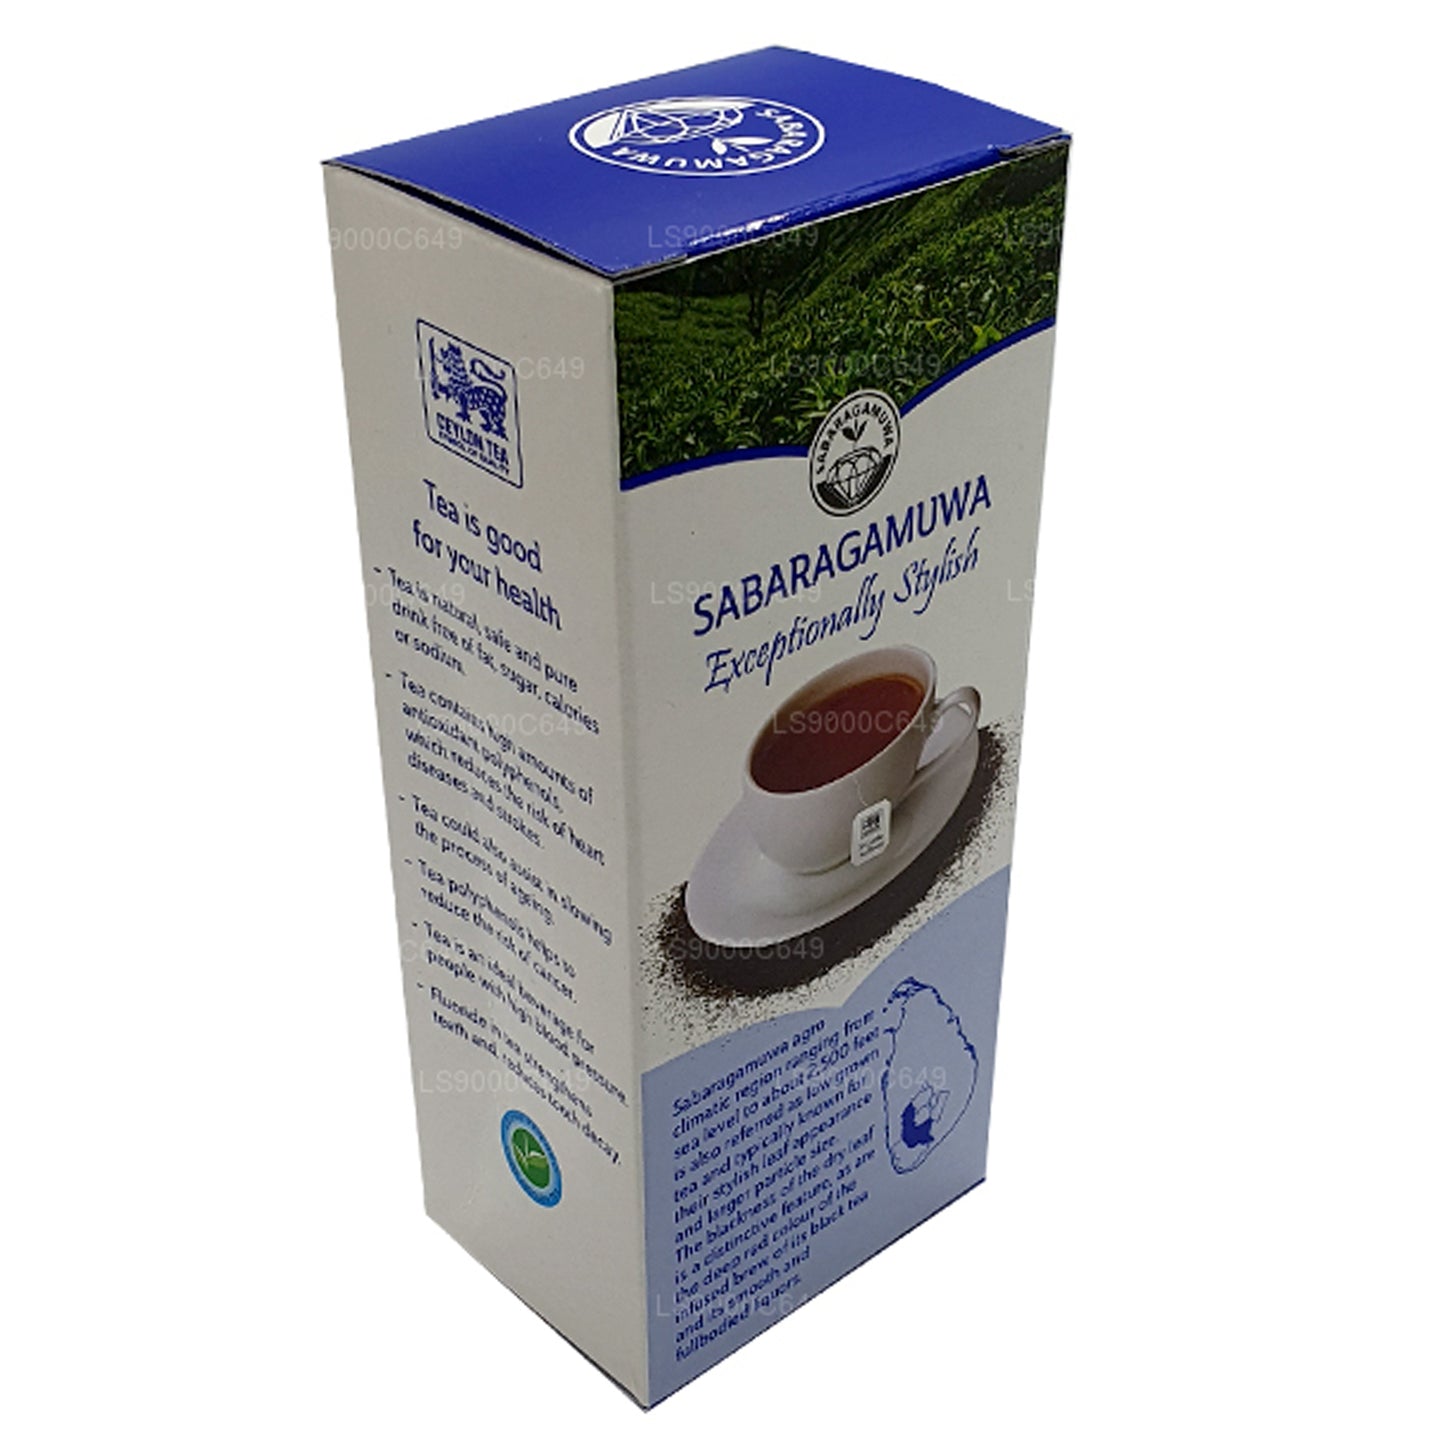 Lakpura Single Region Sabaragamuwa Black Tea